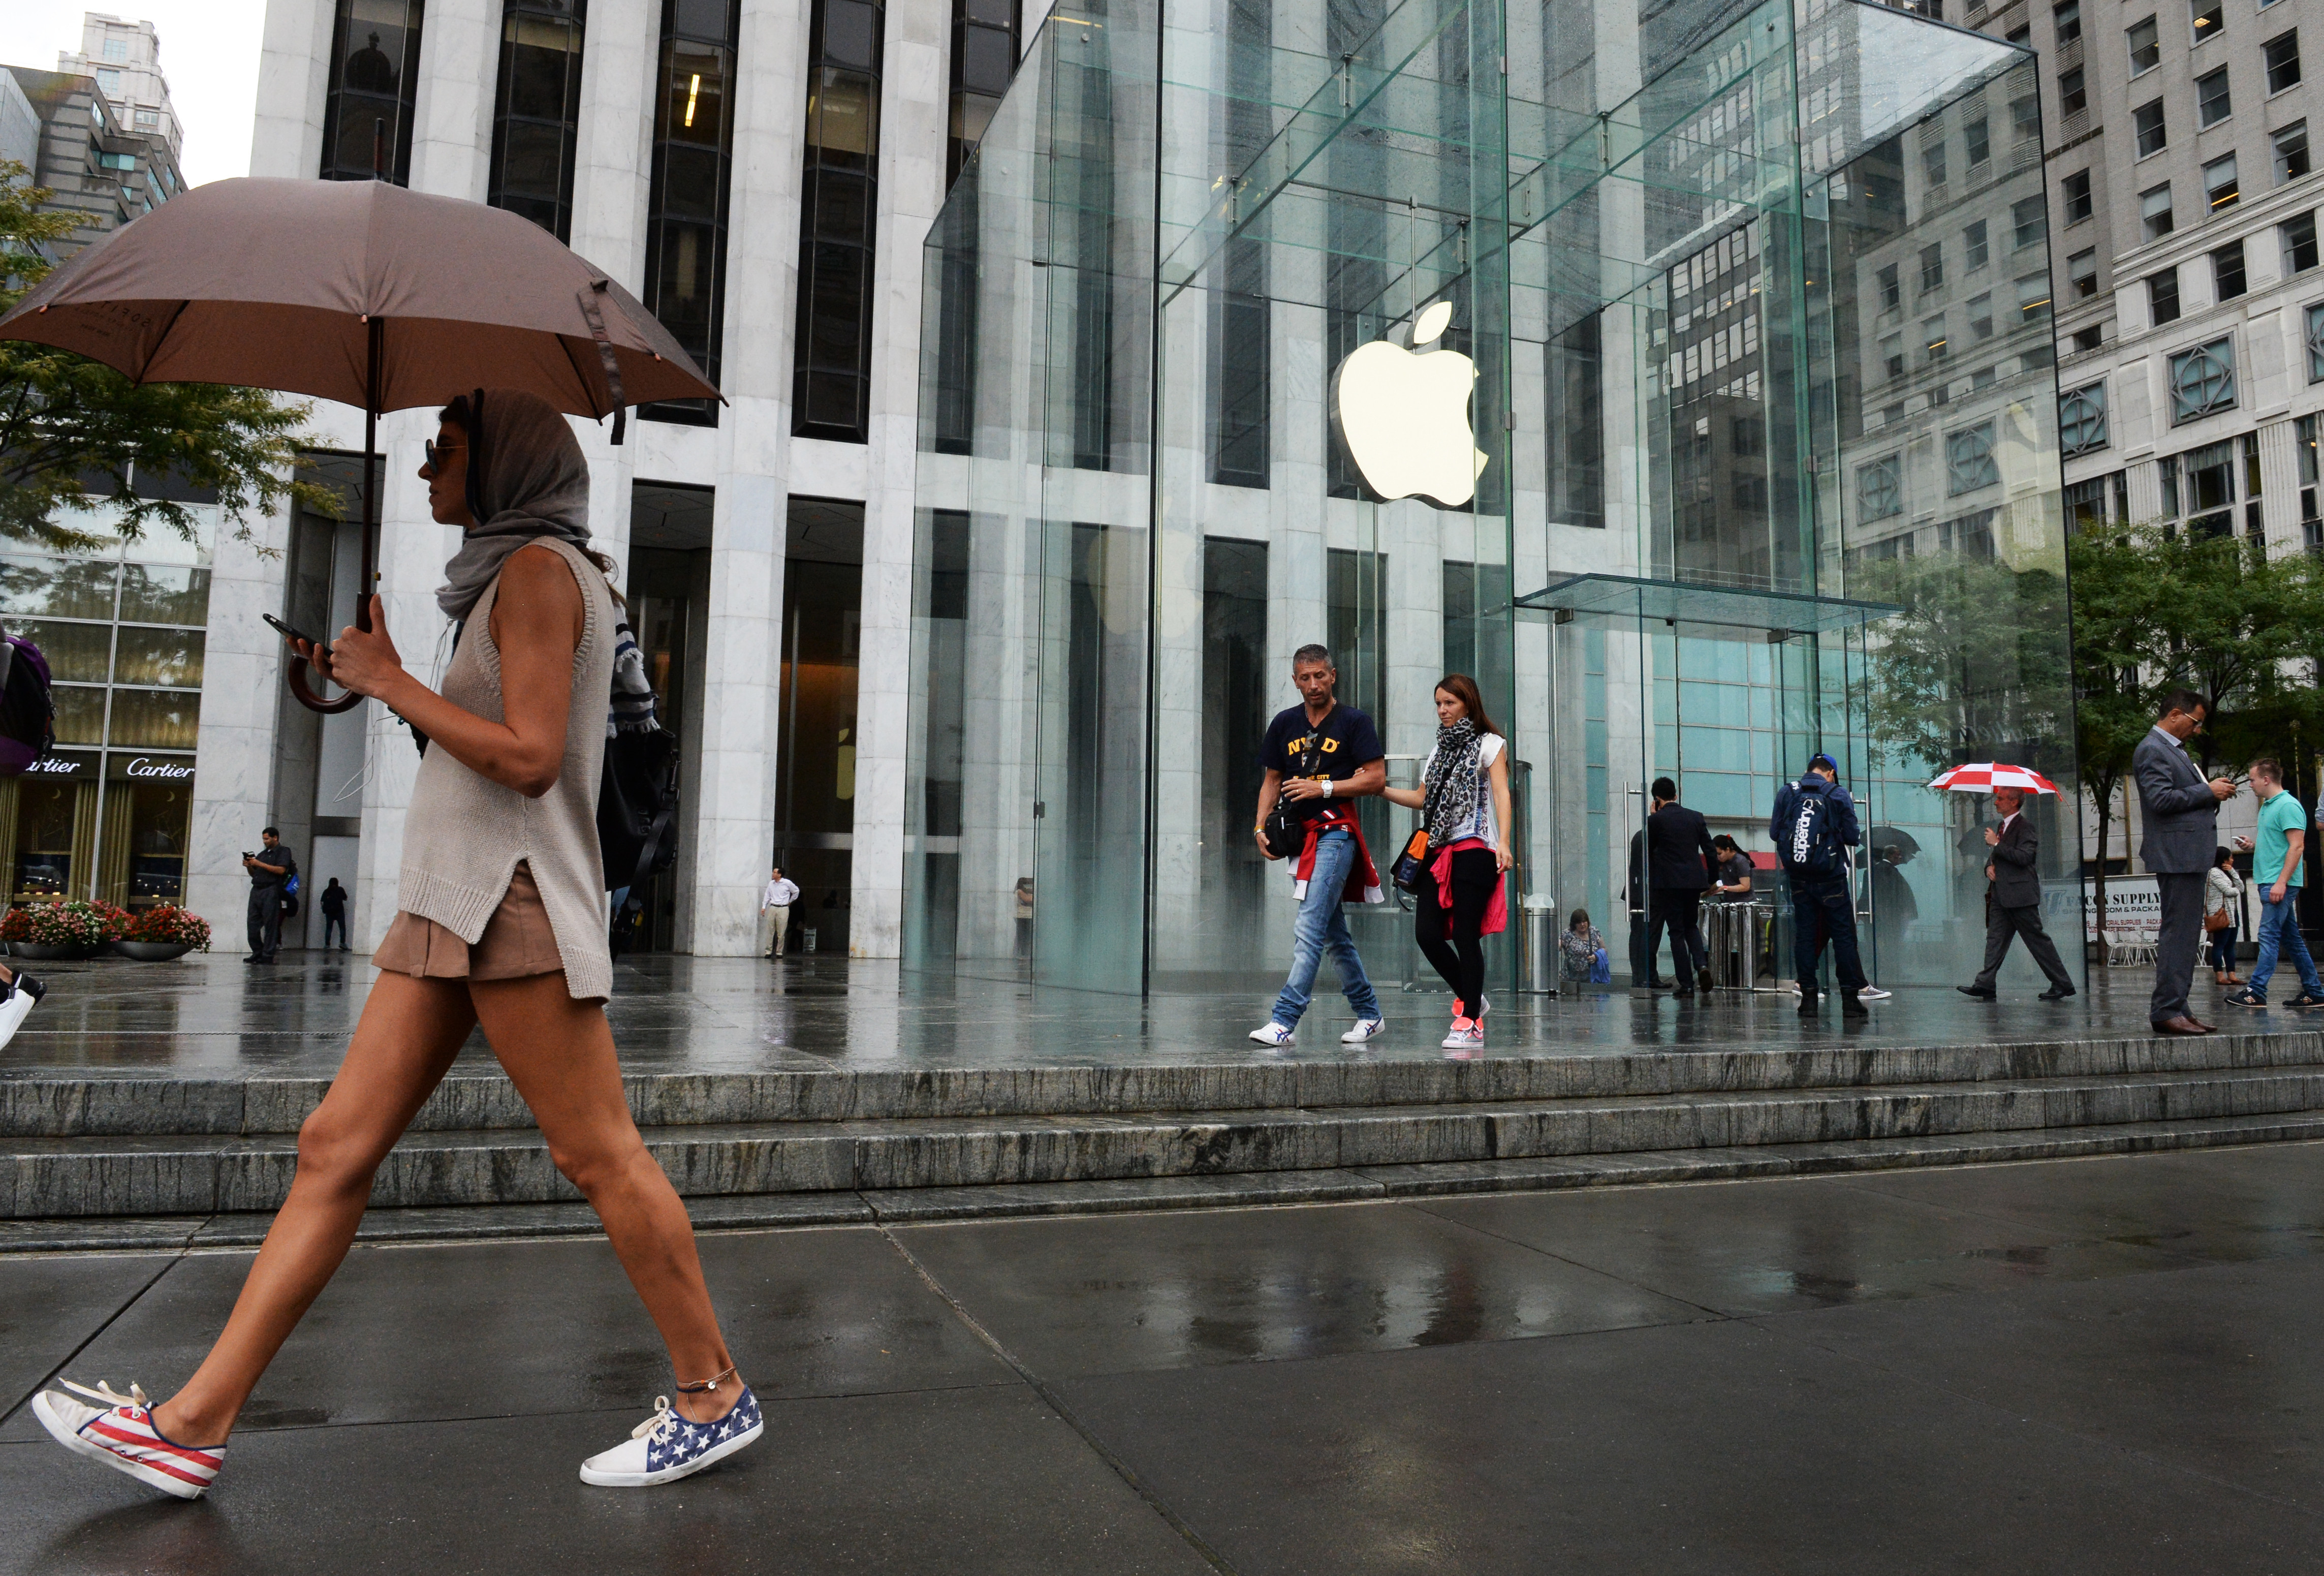 Vагазин Apple в Нью-Йорке. Фото &copy; РИА Новости/Наталья Селиверстова